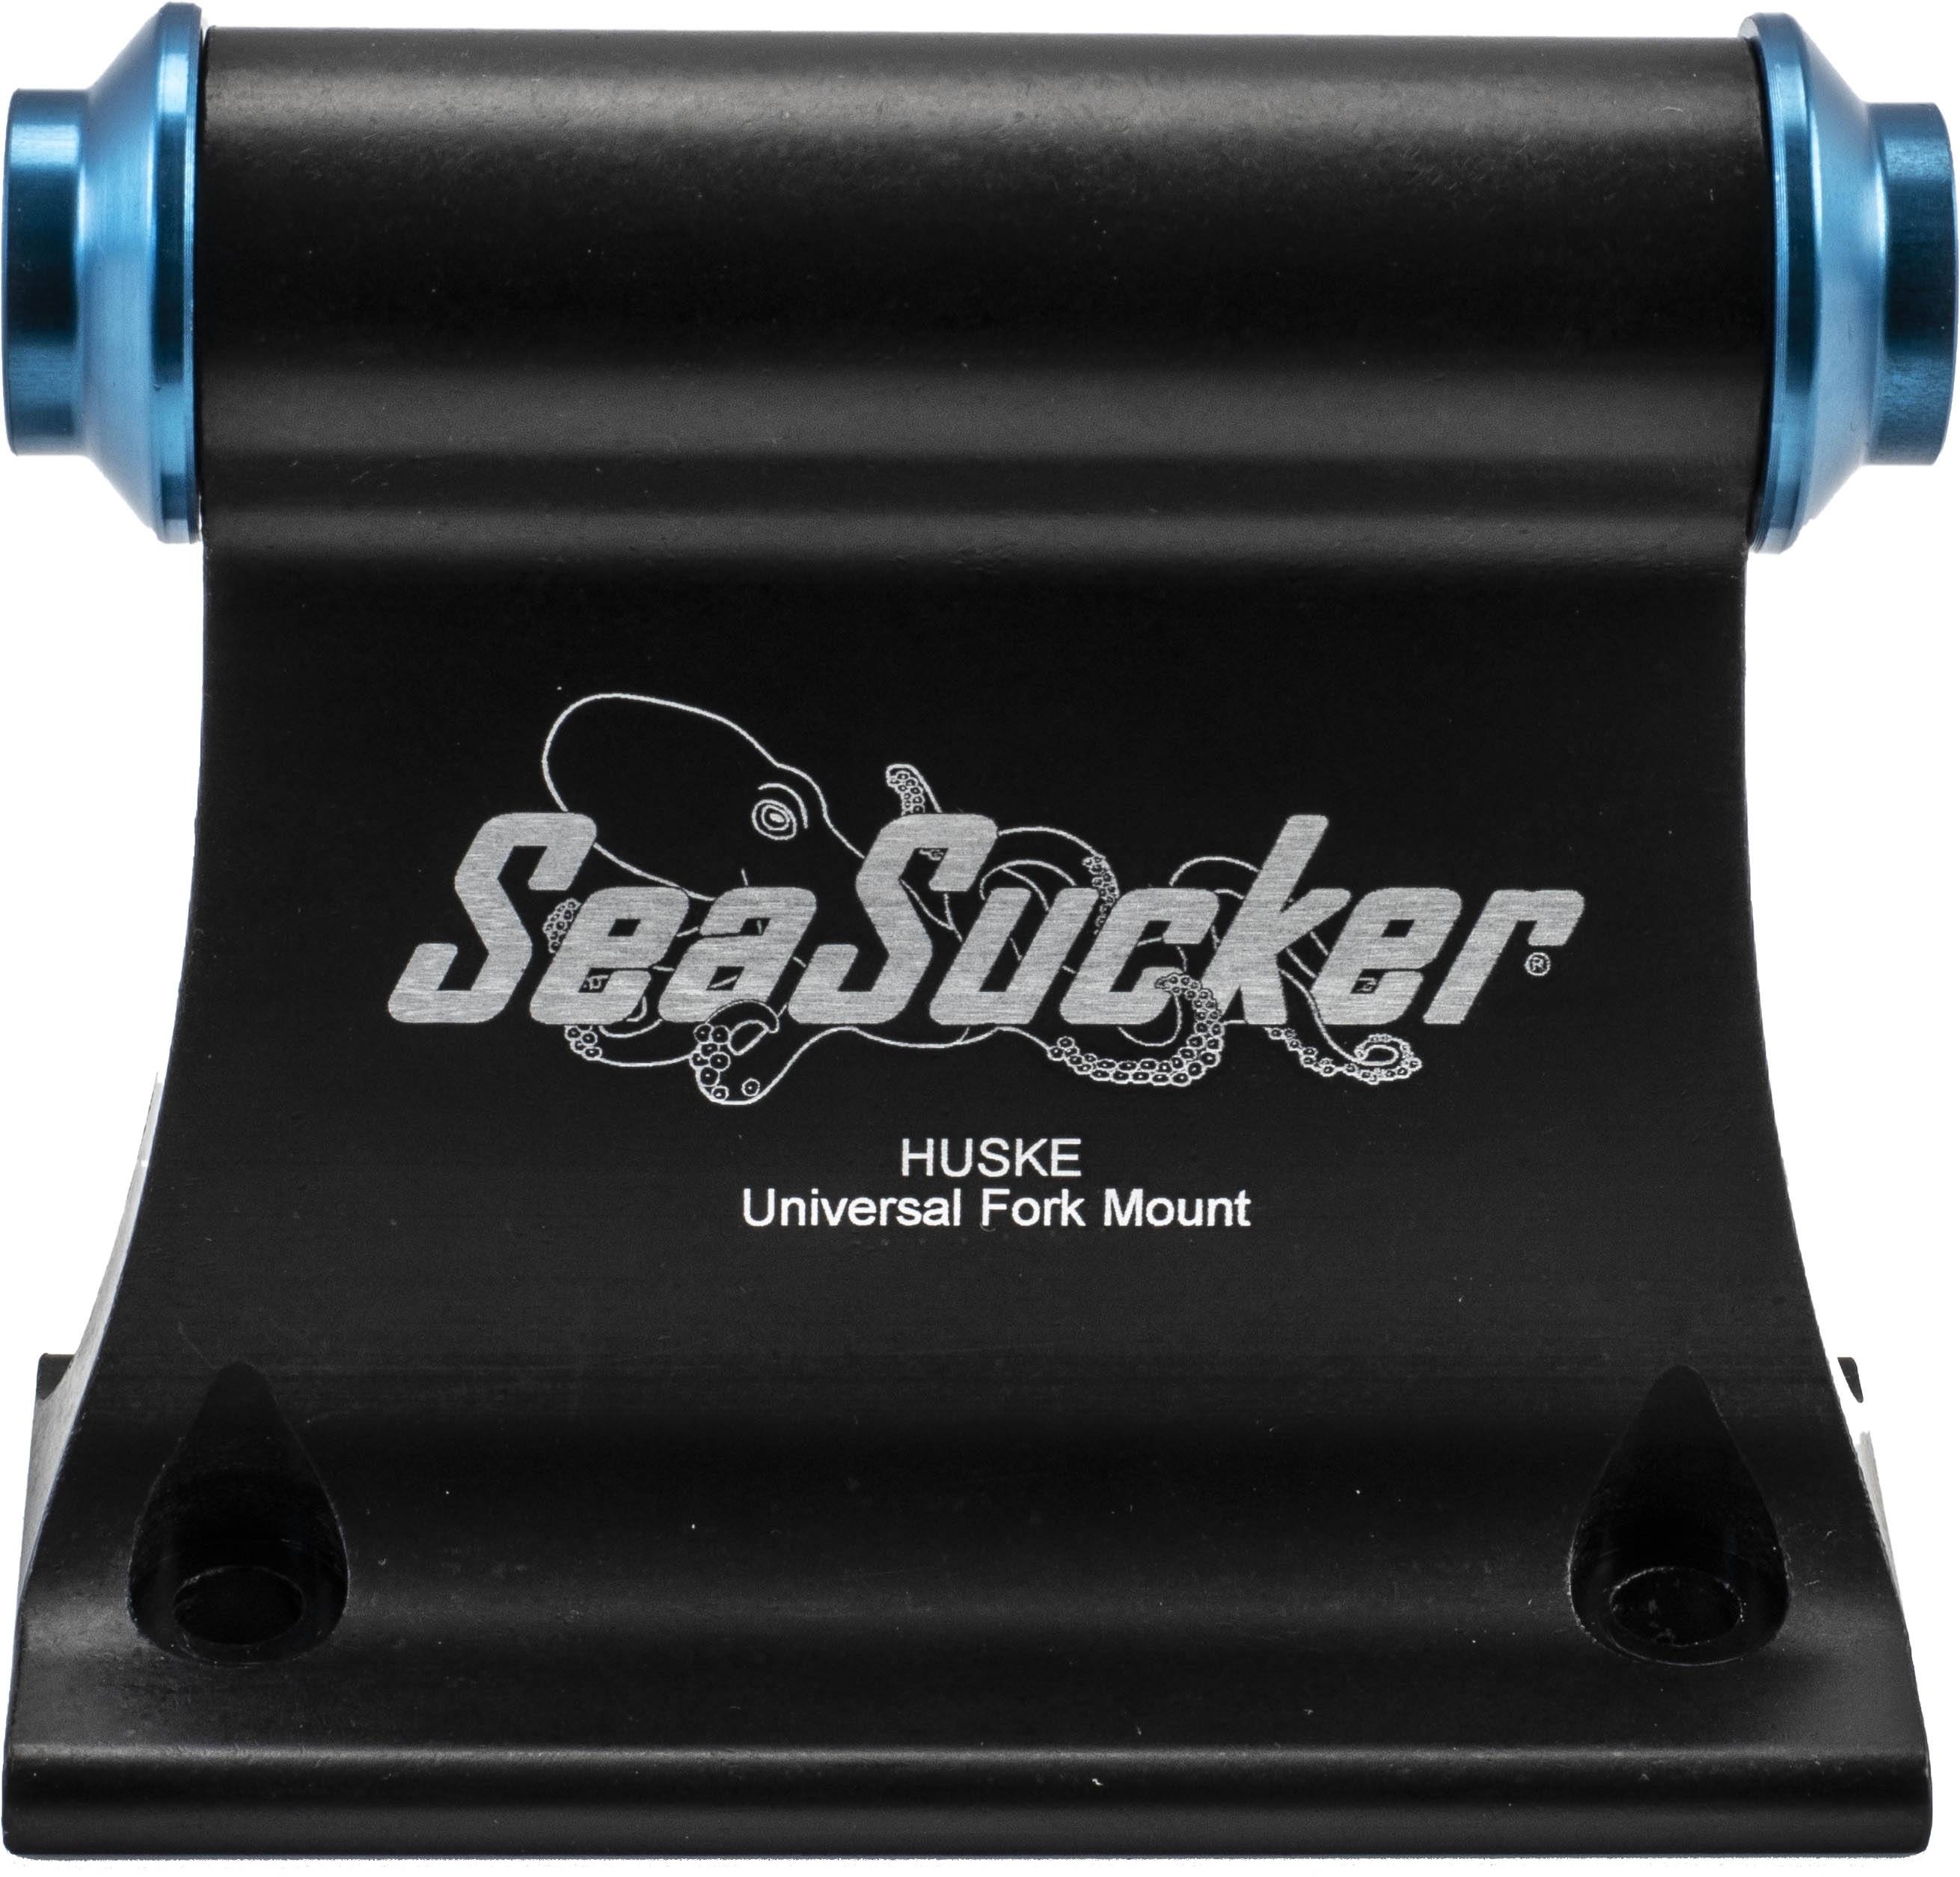 SeaSucker HUSKE with 15 mm x 100 mm Through Axle Plugs installed